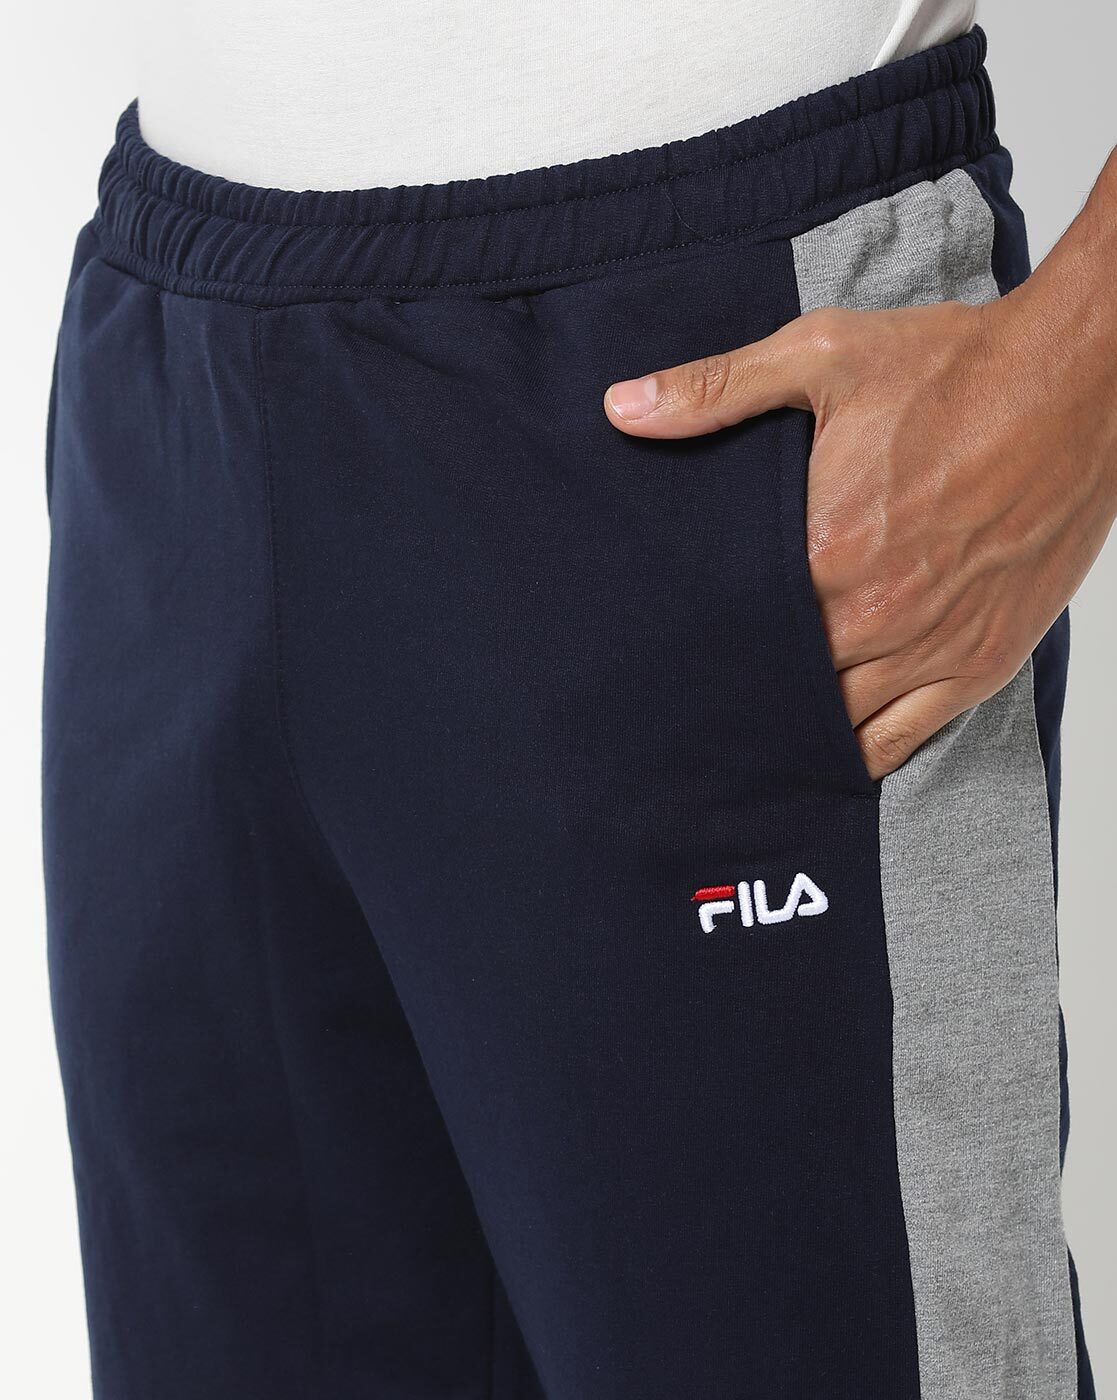 Buy Blue Track Pants for Men by FILA Online